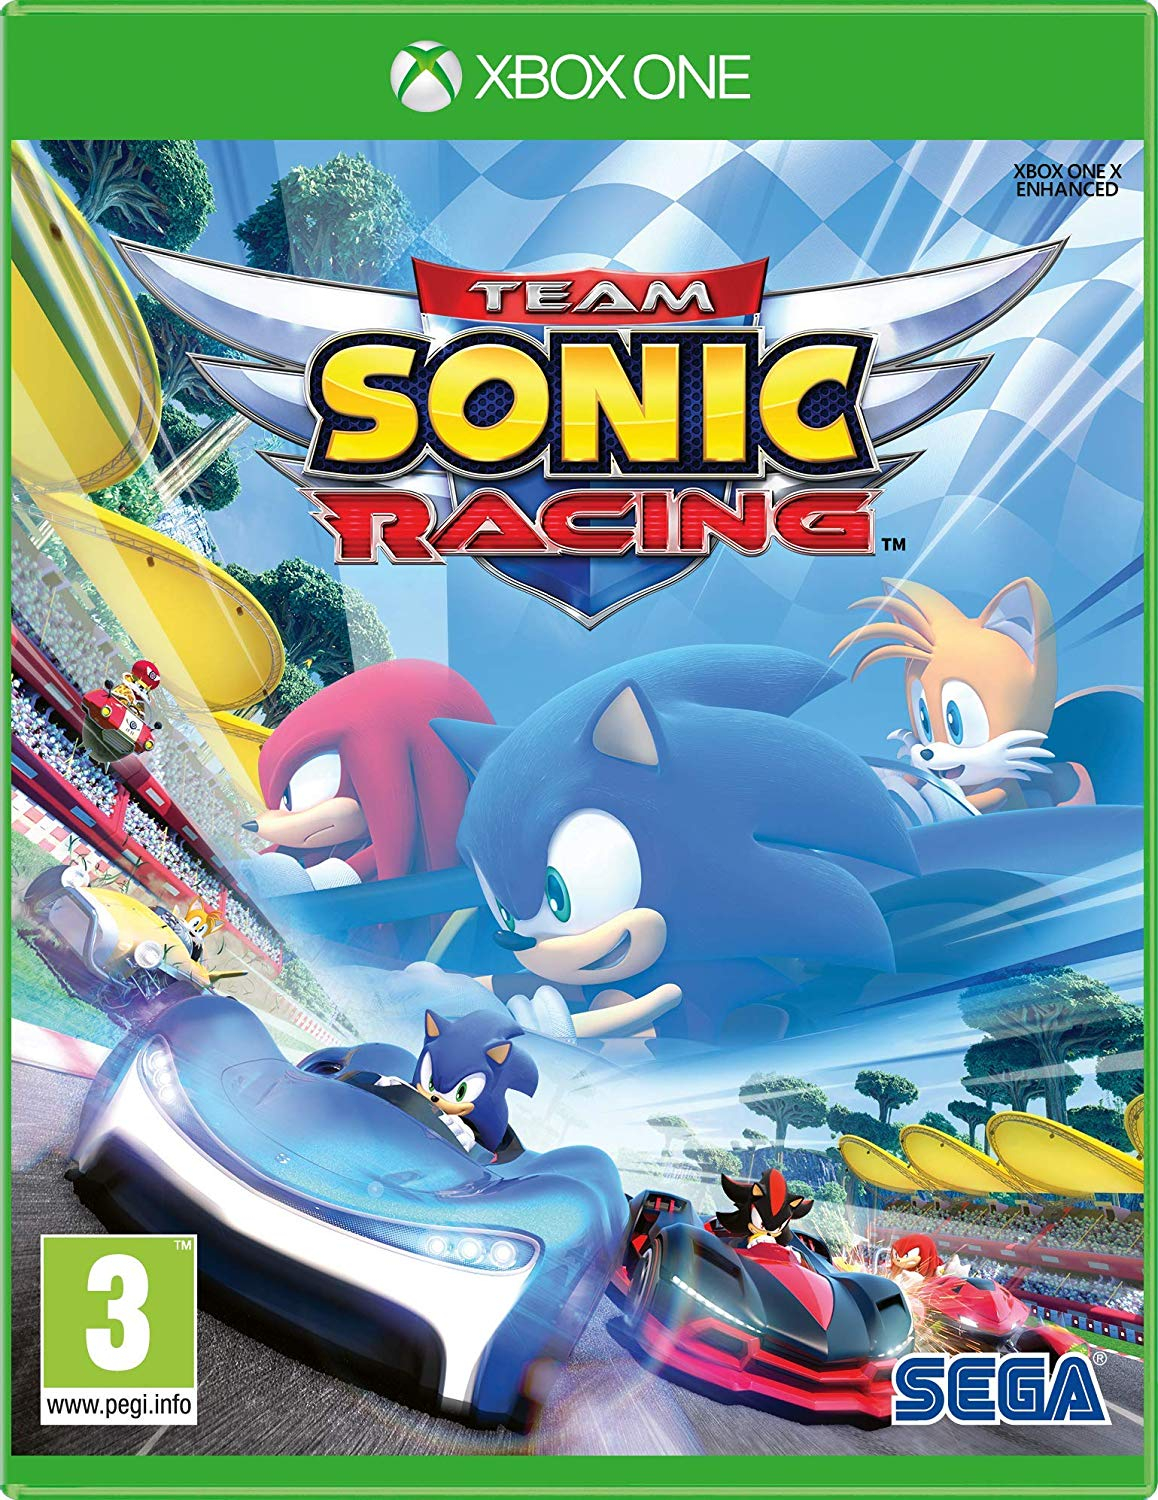 117Â° - Team Sonic Racing Xbox One - Â£19.97 @ Currys PC World